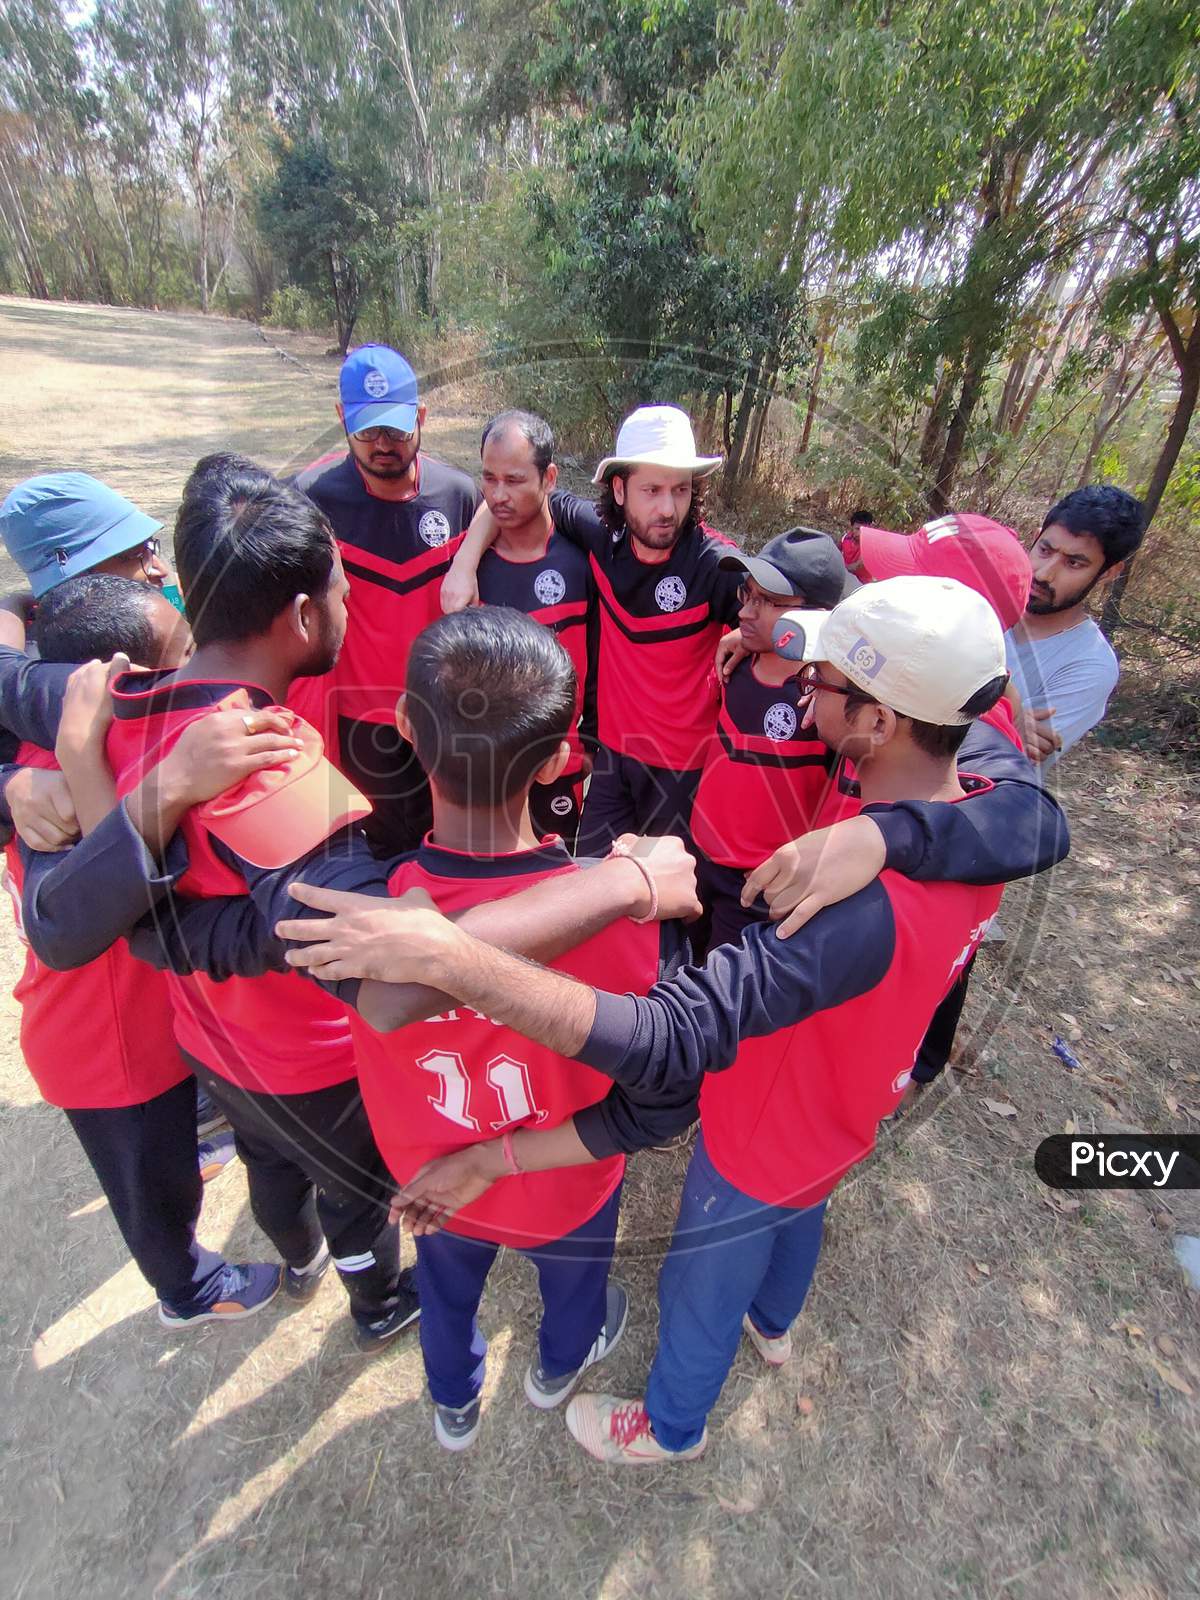 Unity of cricket match